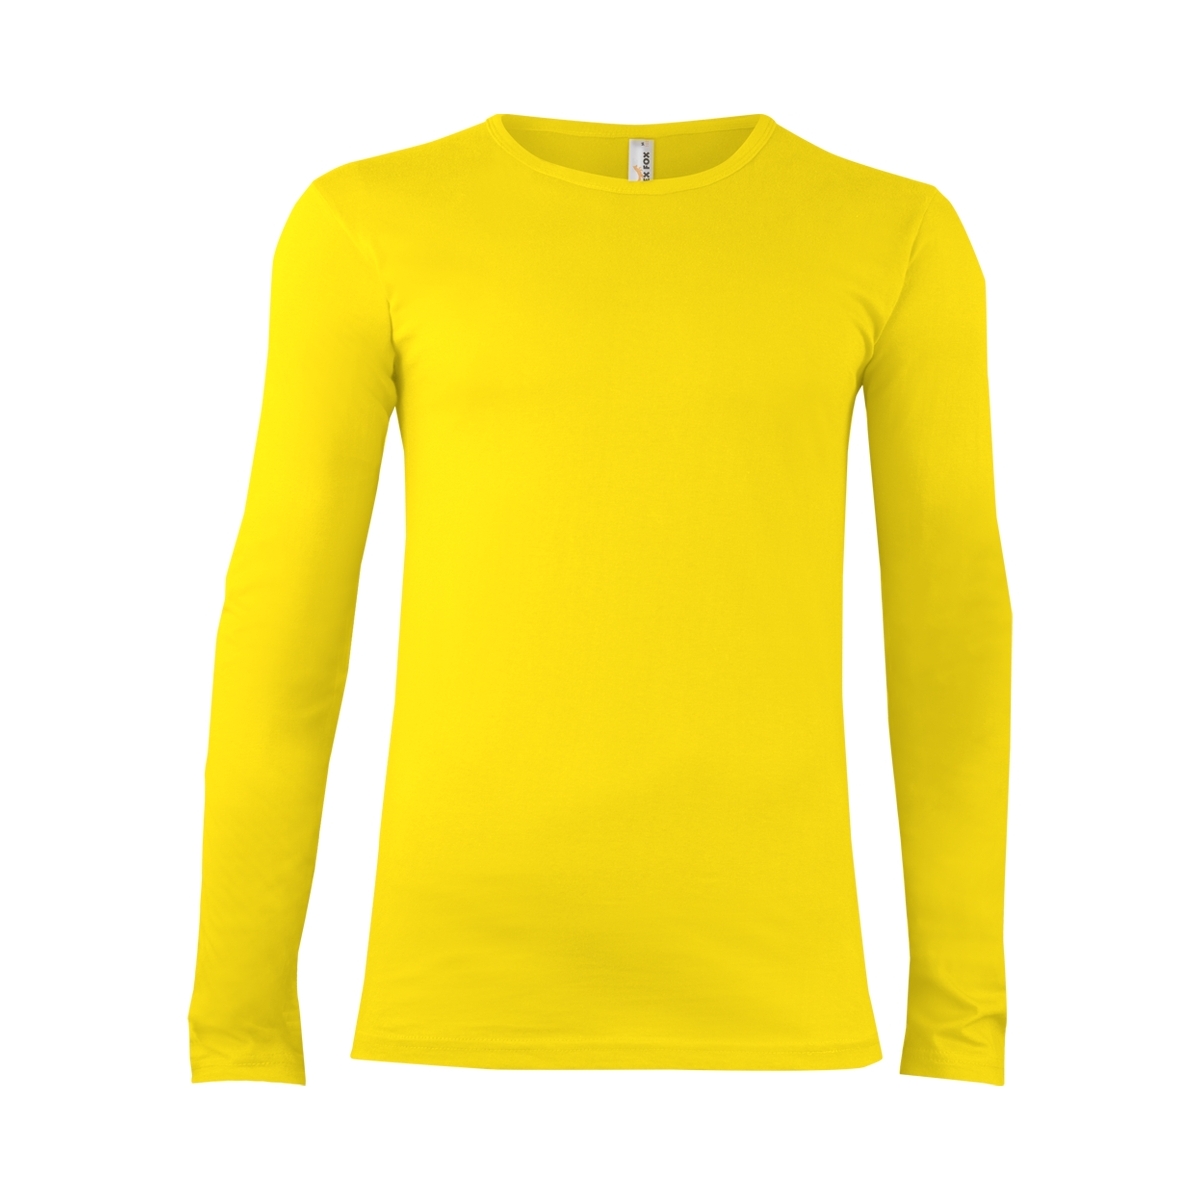 Tričko s dlouhým rukávem Alex Fox Long - žluté, L